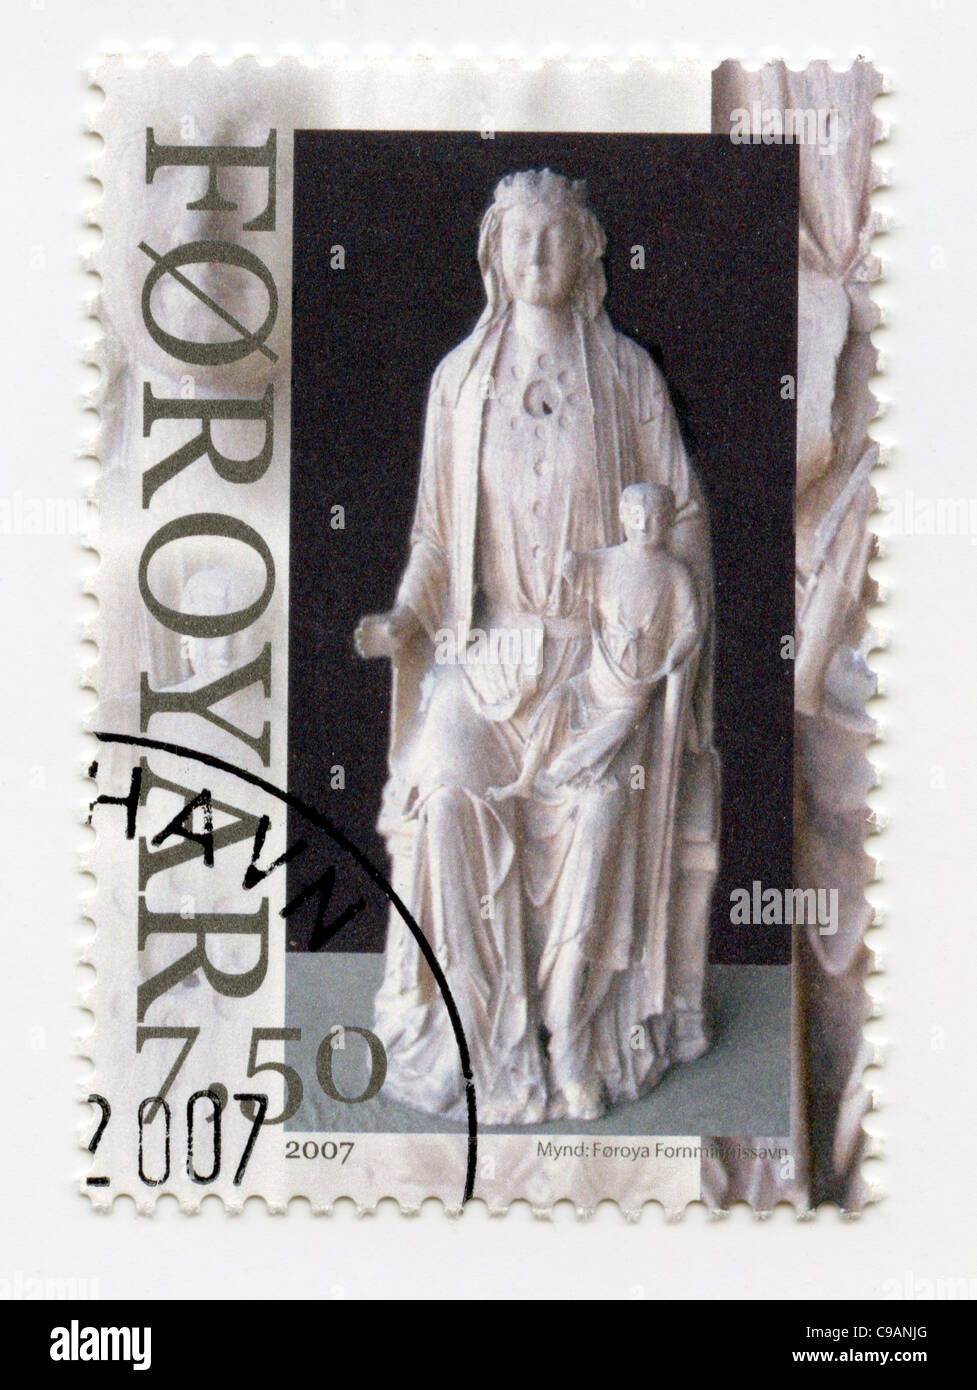 Faroe Island postage stamp Stock Photo